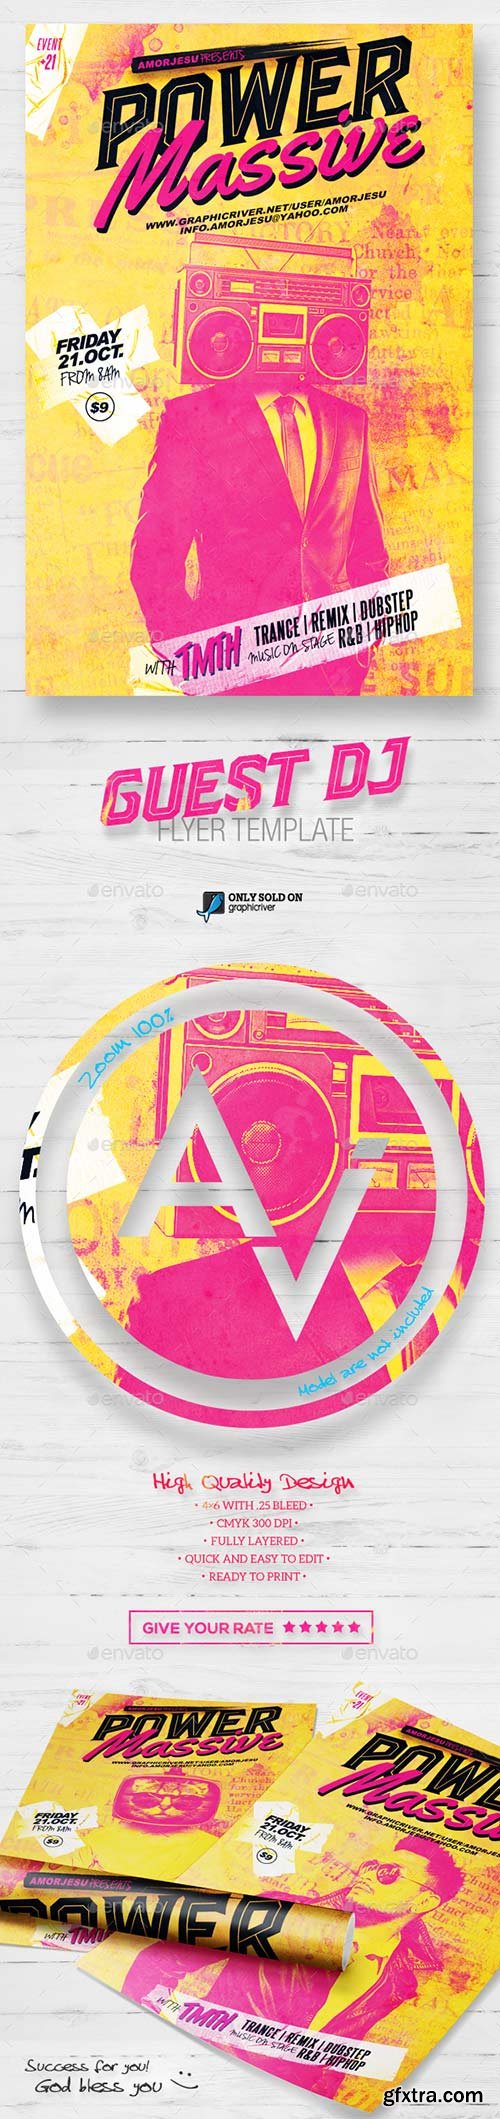 Graphicriver - Guest DJ Flyer Template V4 13932010